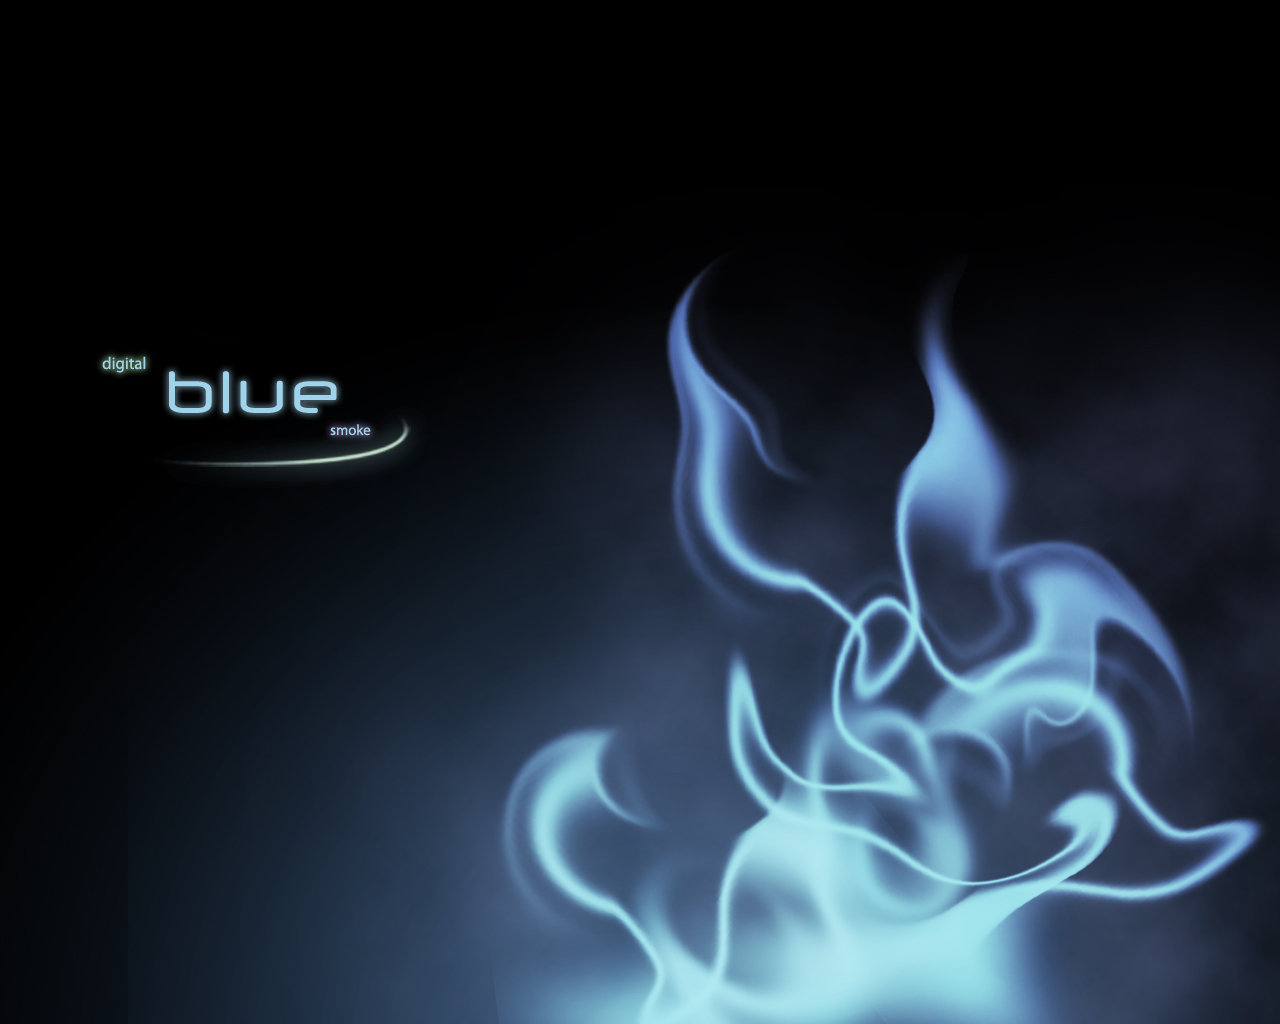 http://2.bp.blogspot.com/_Q6oia9SyxpY/TRBt3E_fdwI/AAAAAAAAA4g/yfZF4wxGbro/s1600/img-wallpapers-digital-blue-smoke-redline-redapple-9199.jpg